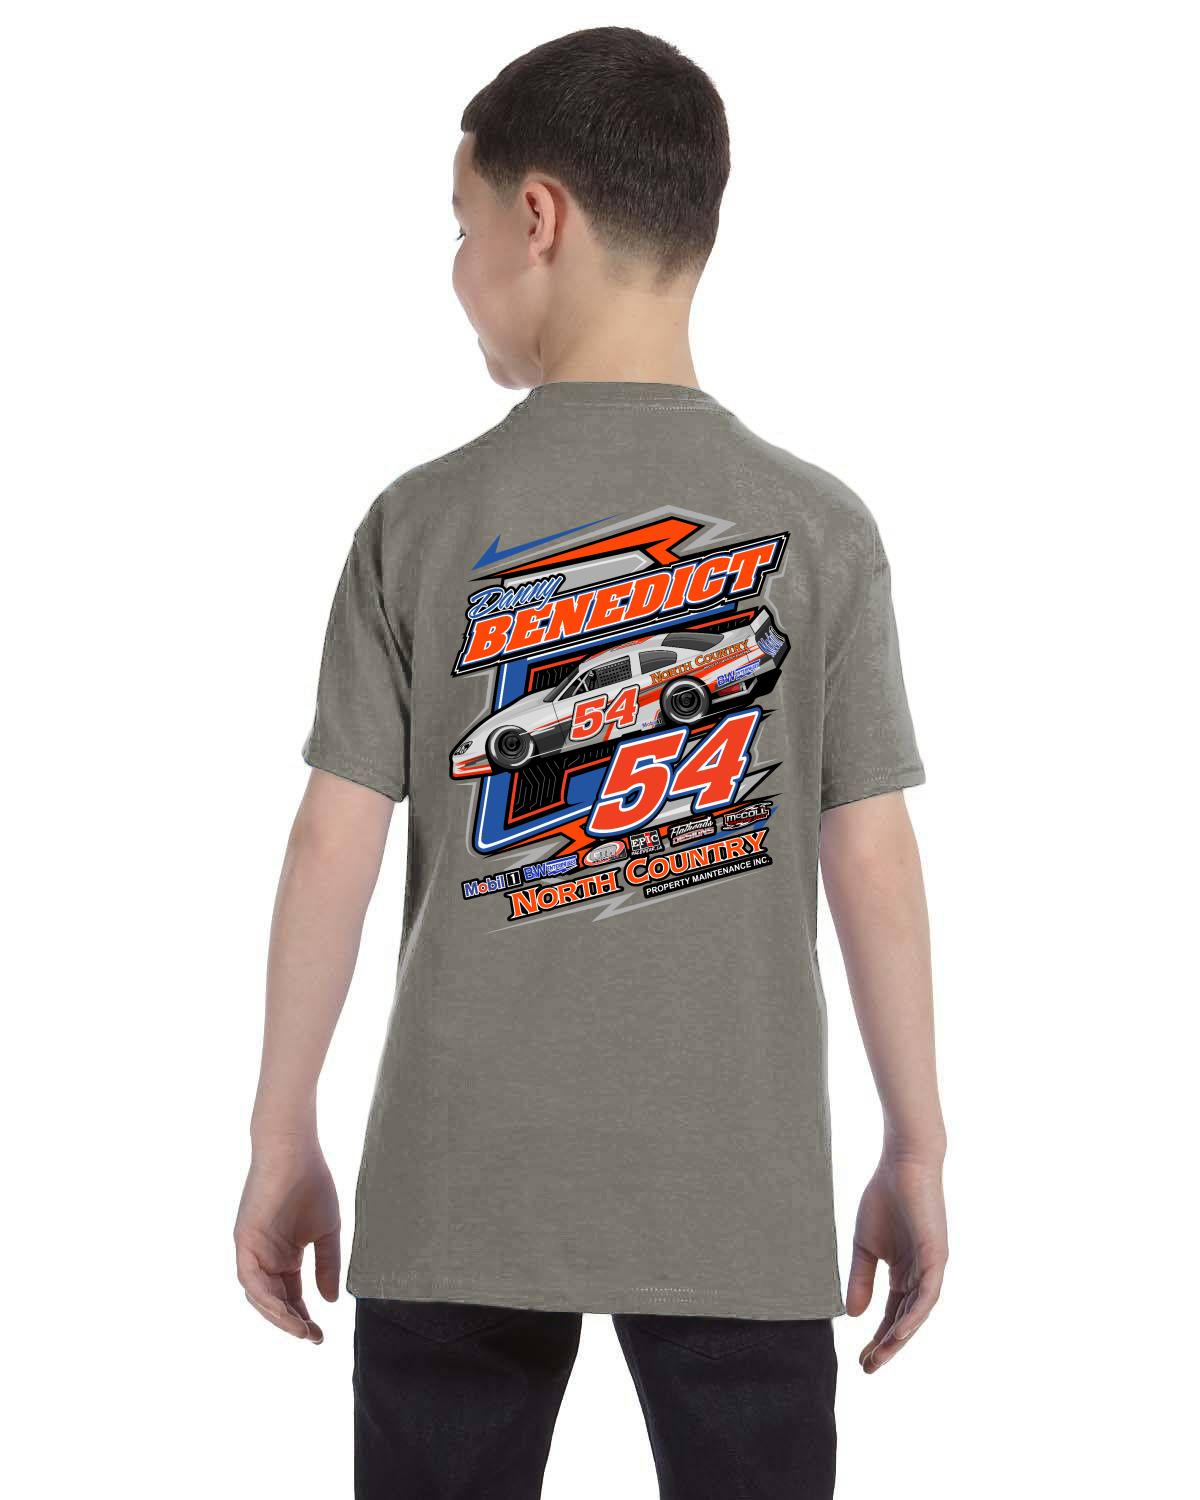 Danny Benedict Racing Youth T-Shirt